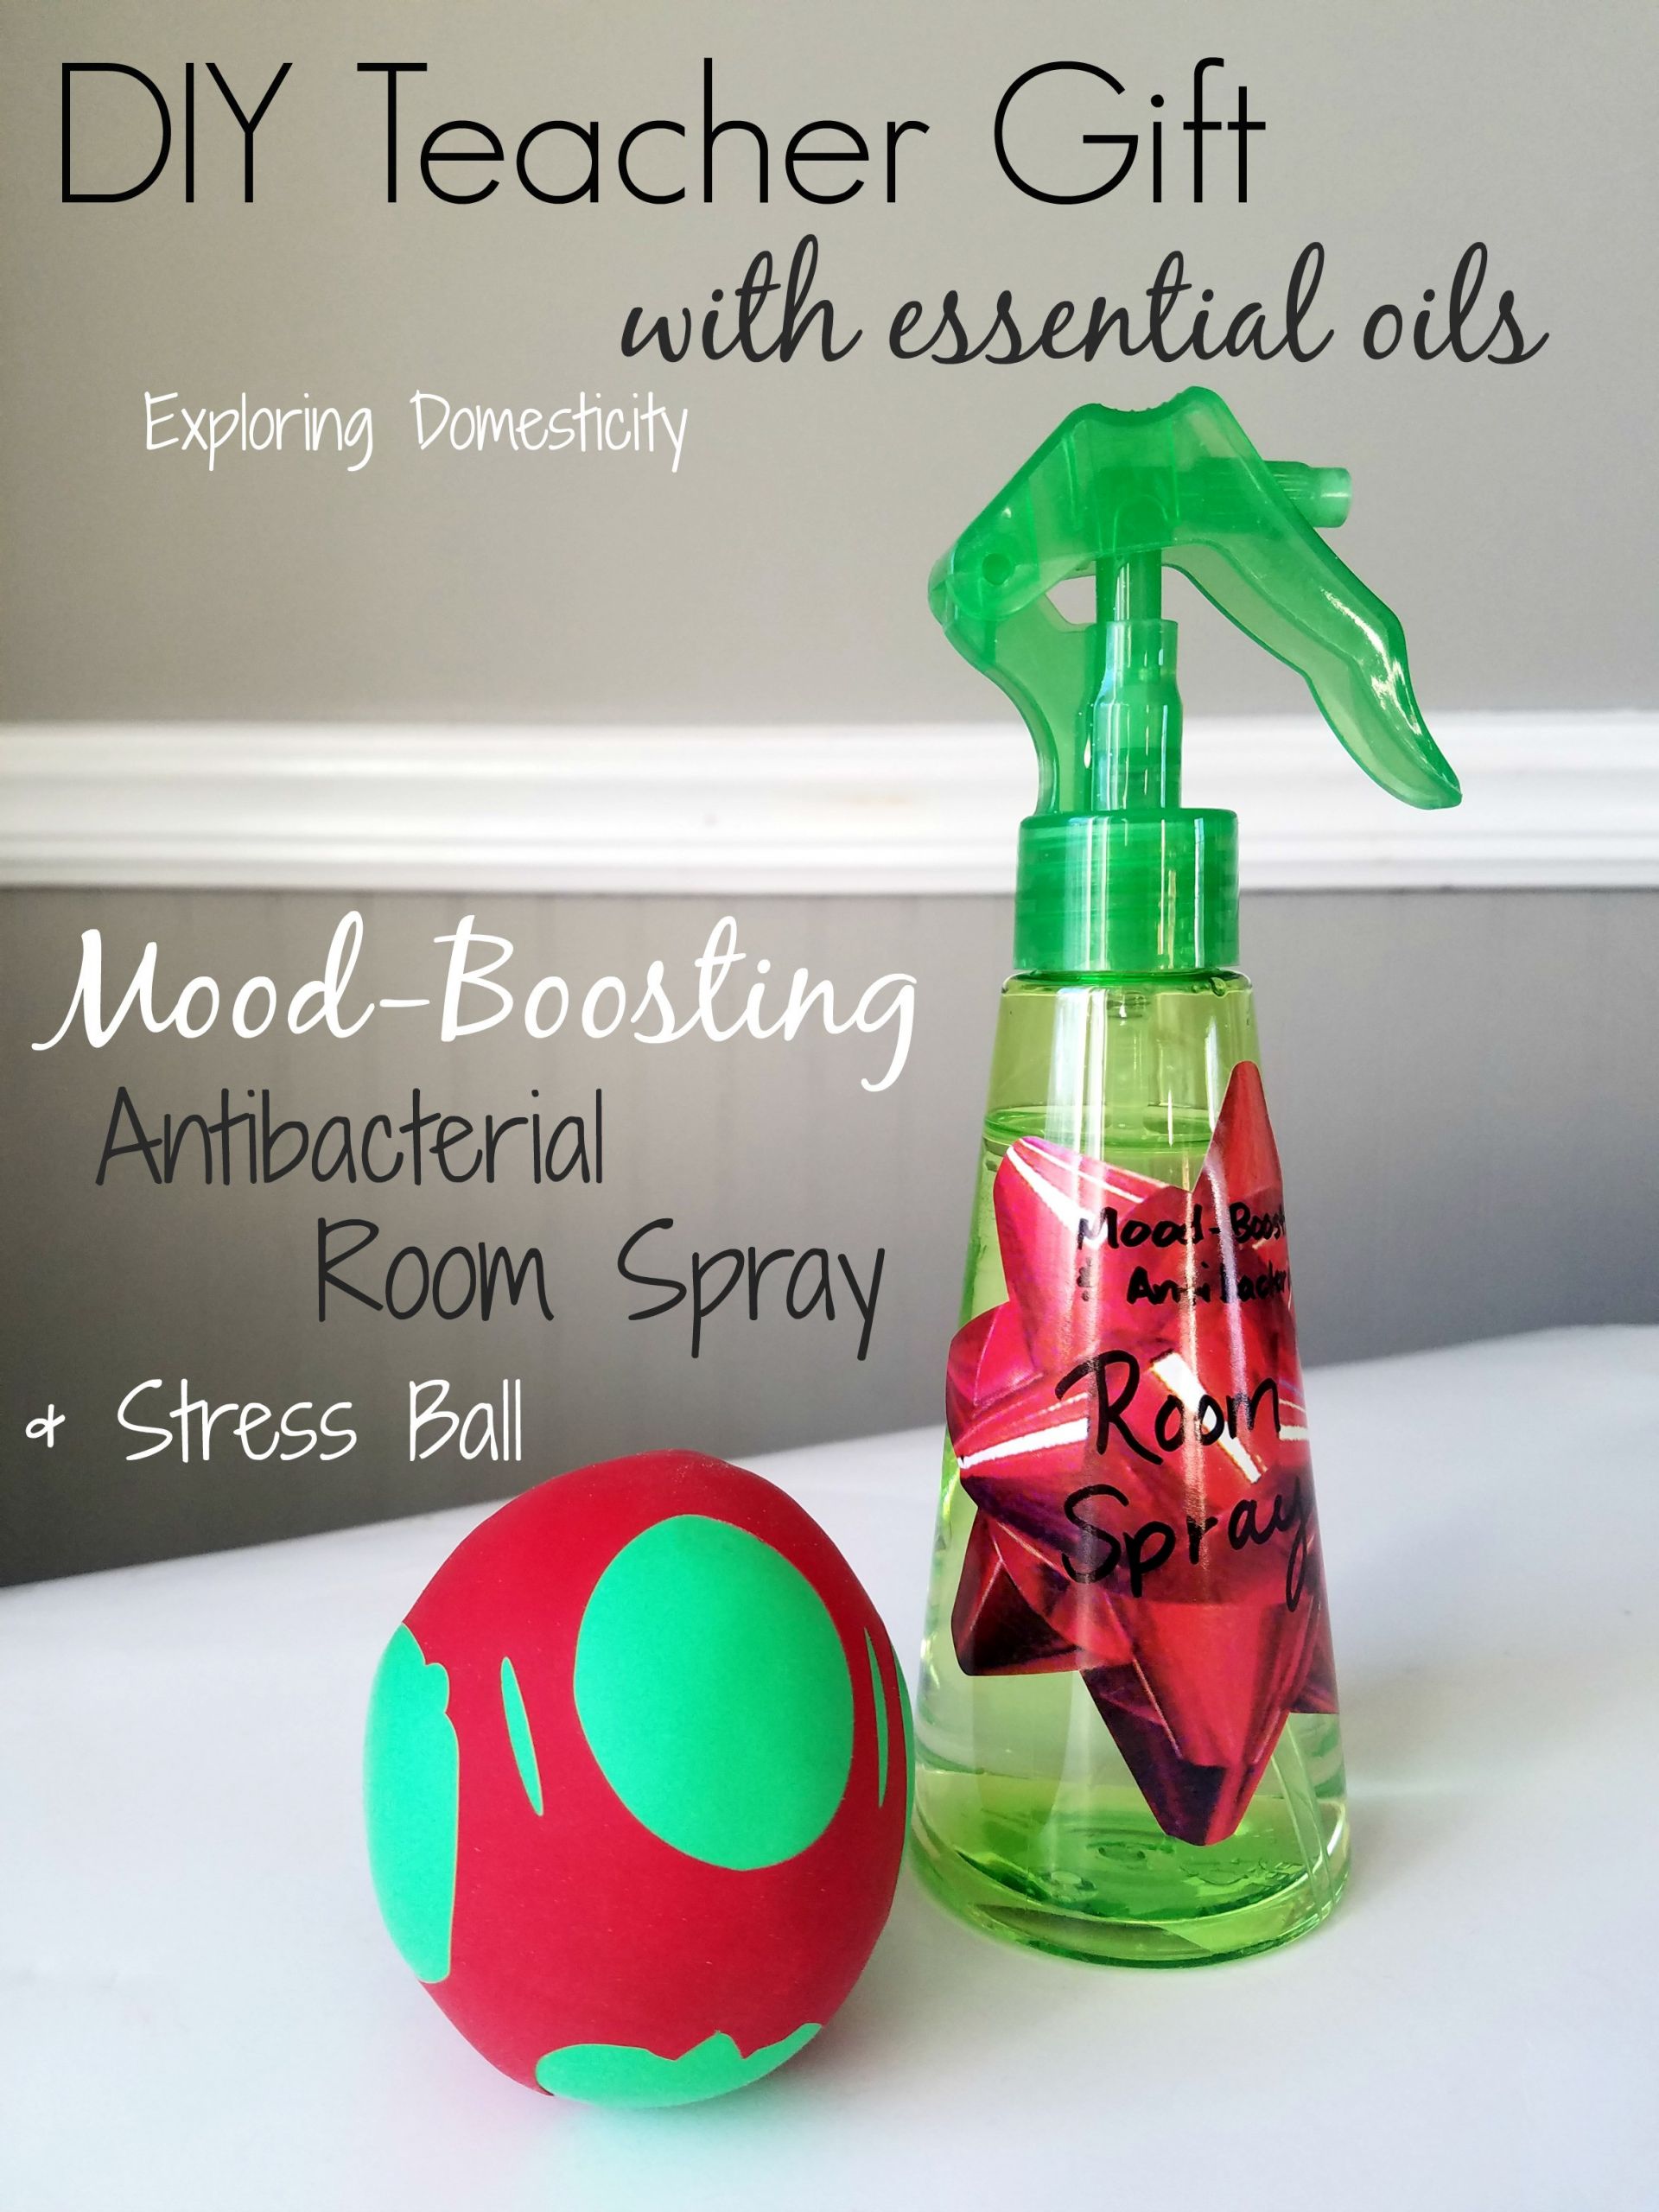 DIY Teacher Gifts
 DIY Teacher Gift with Essential Oils Room Spray and